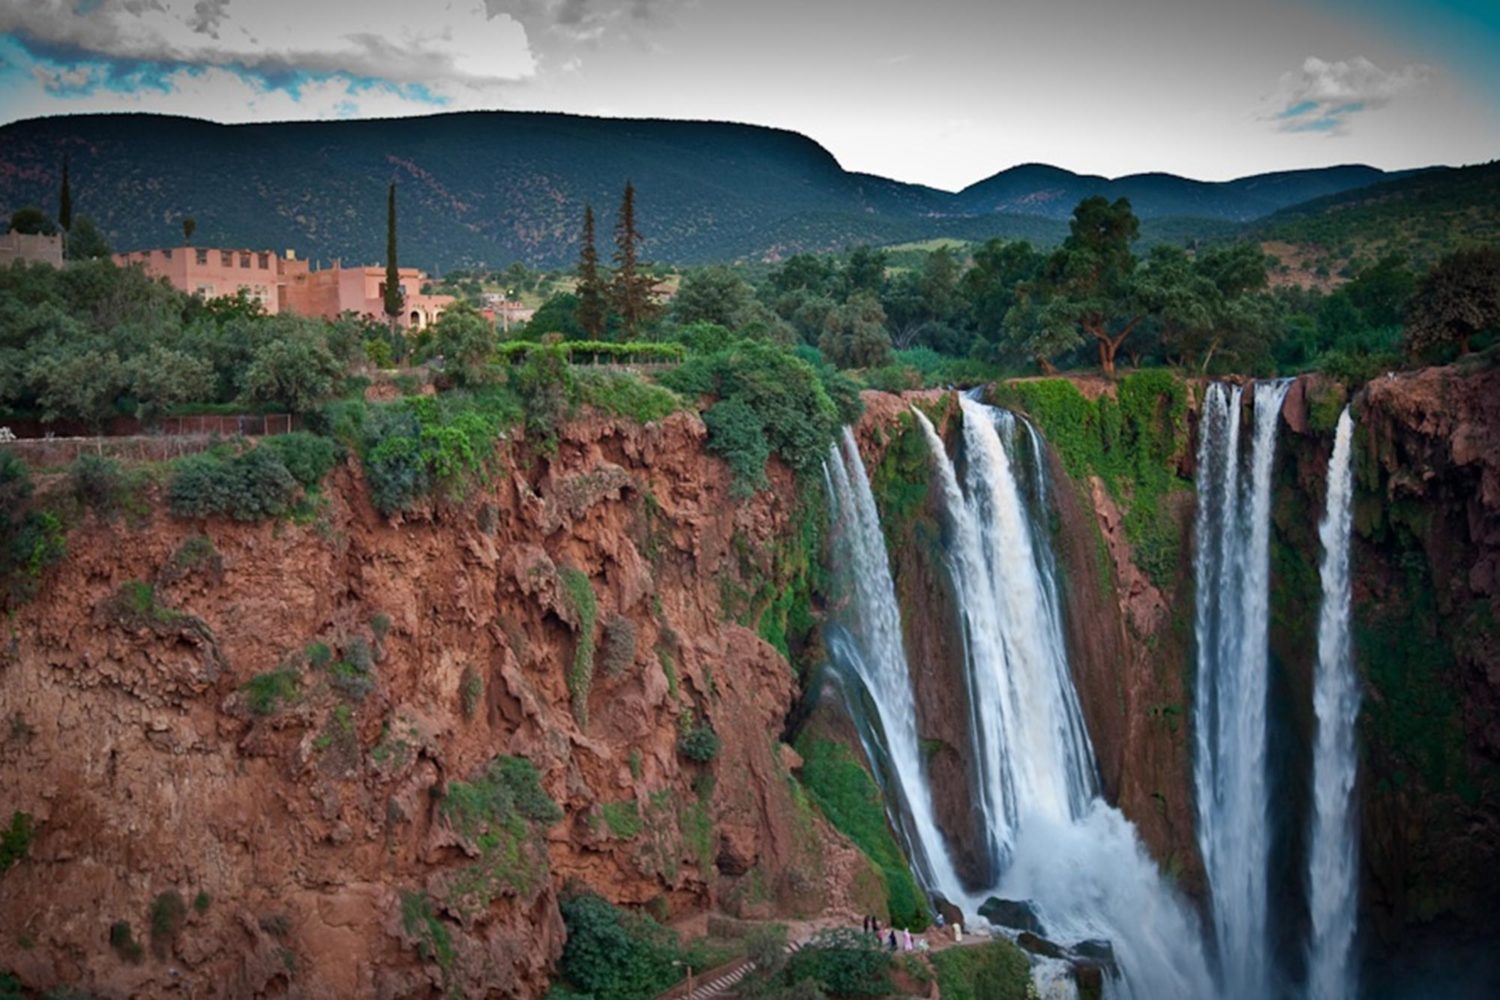 Ouzoud waterfalls day trip from marrakech - Best Morocco Desert Tours